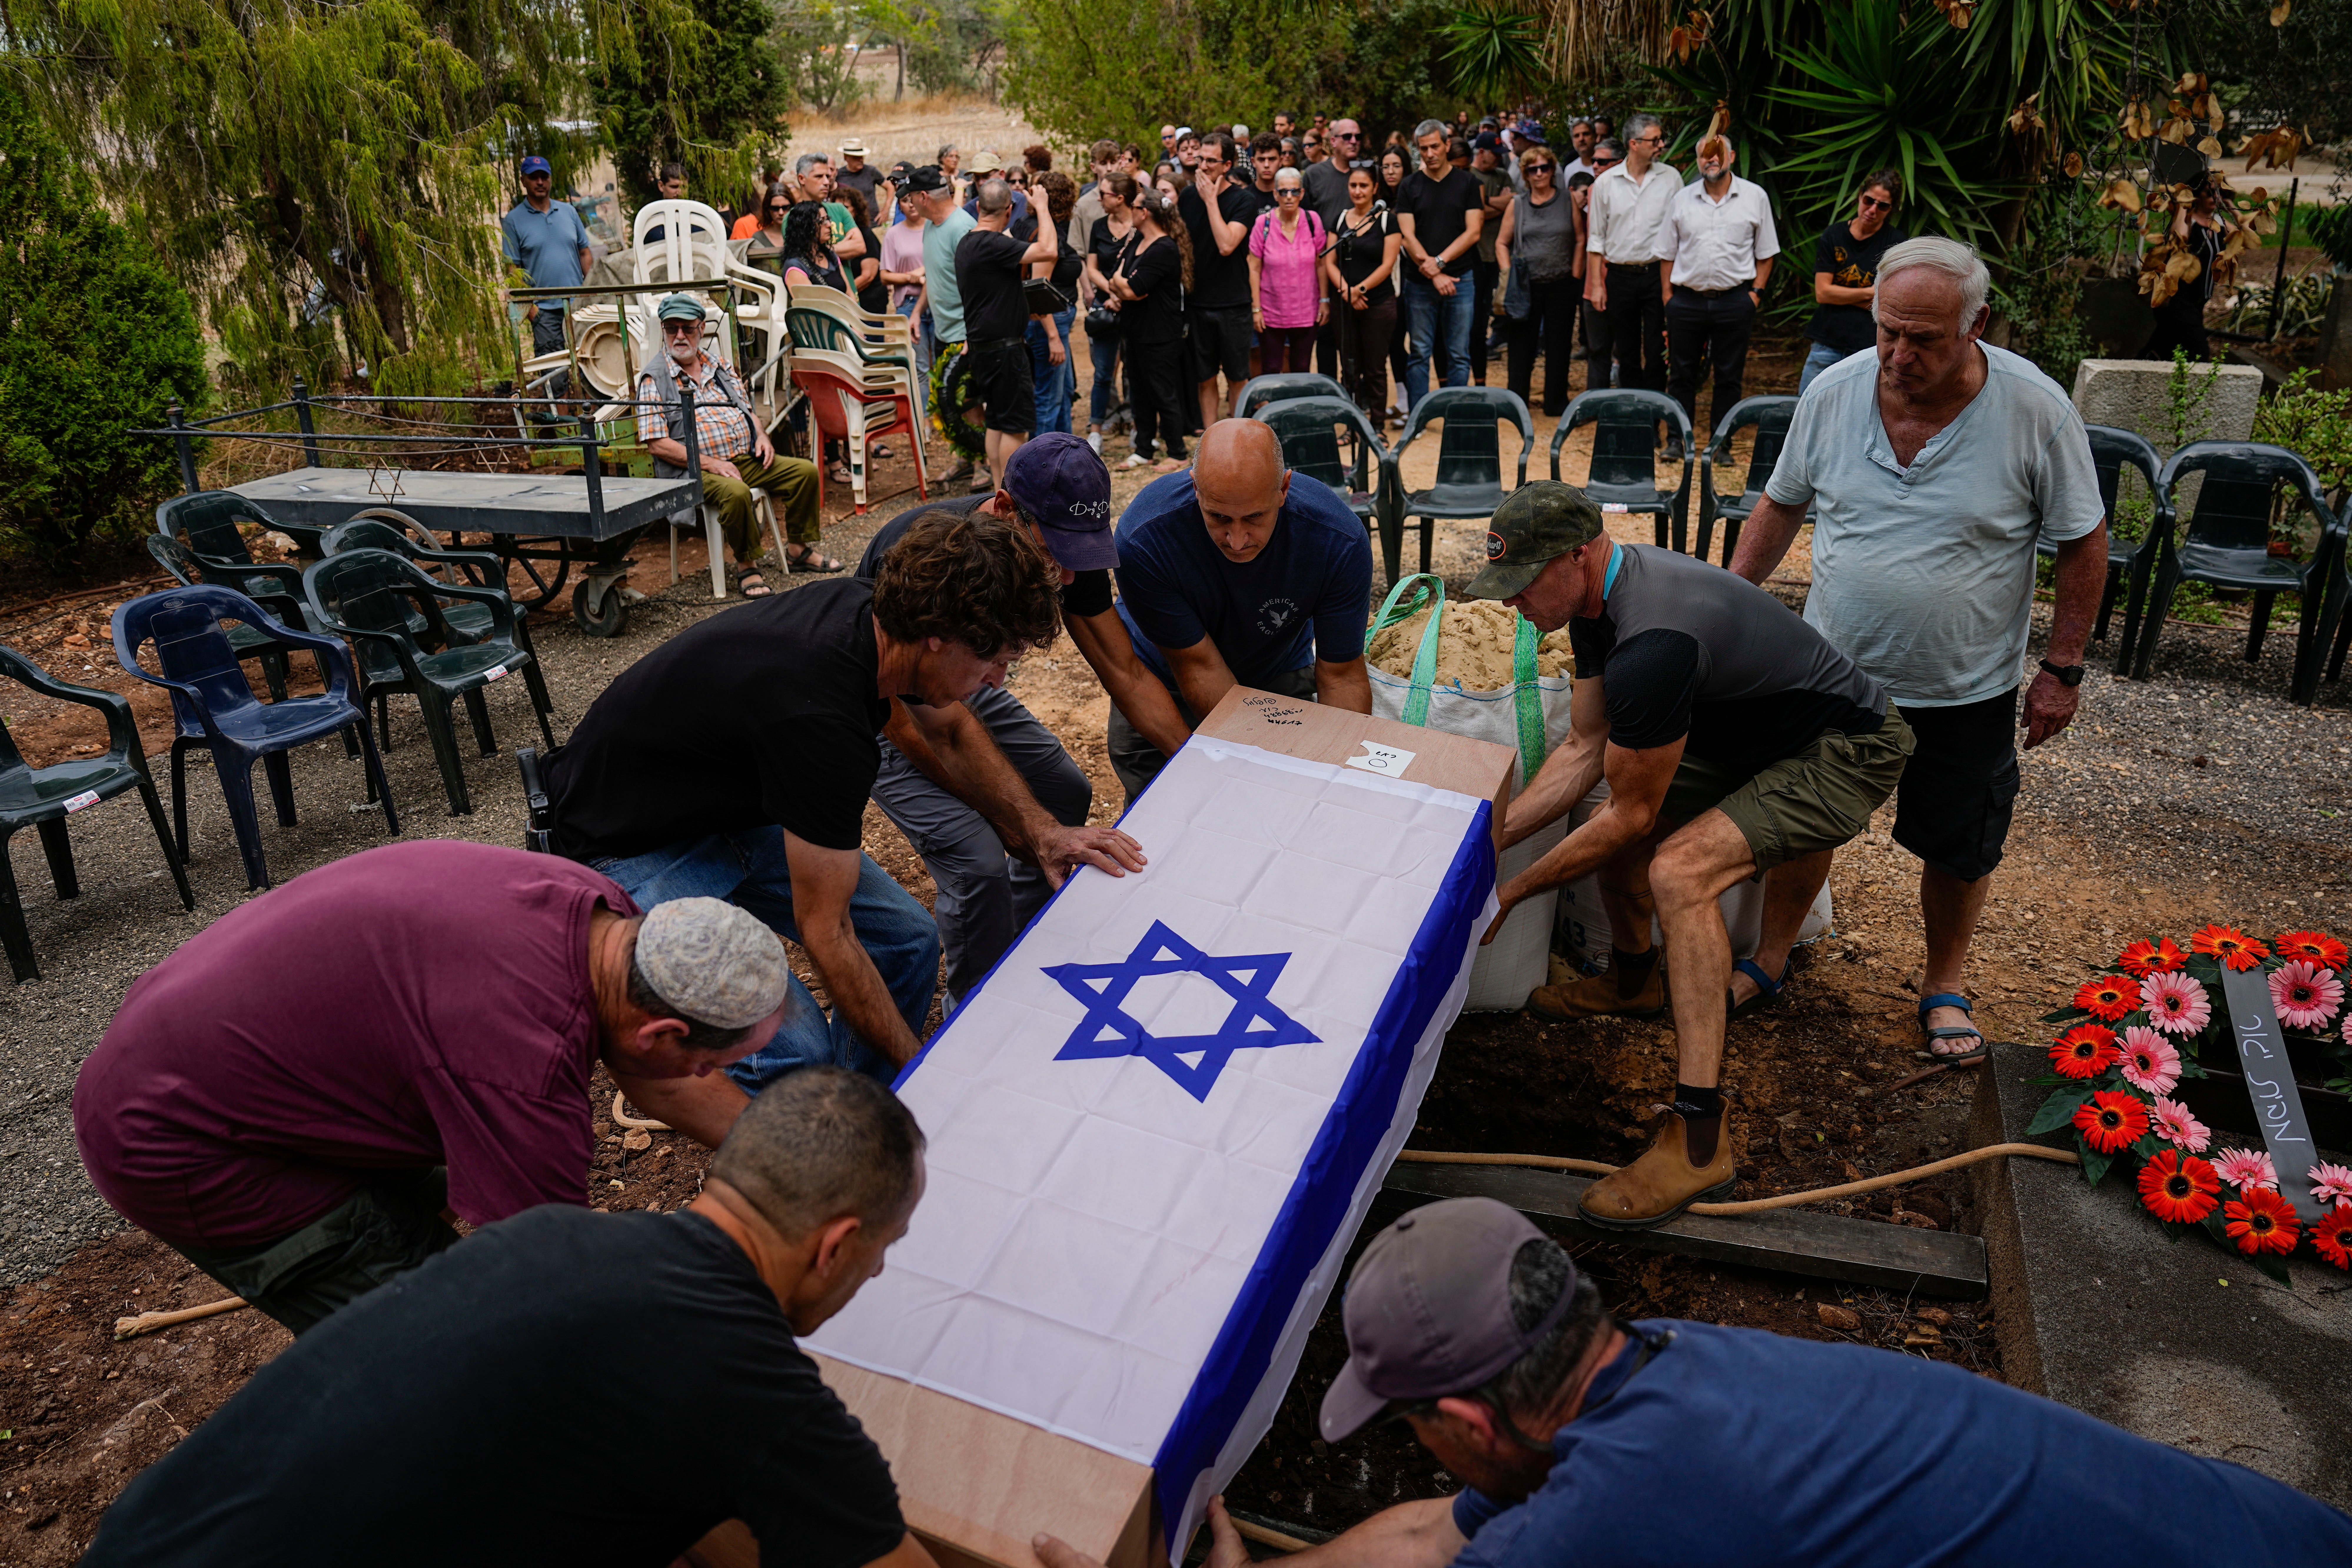 Nadav’s brother Roi Popplewell was buried at kibbutz Yagur near Haifa, on 27 October